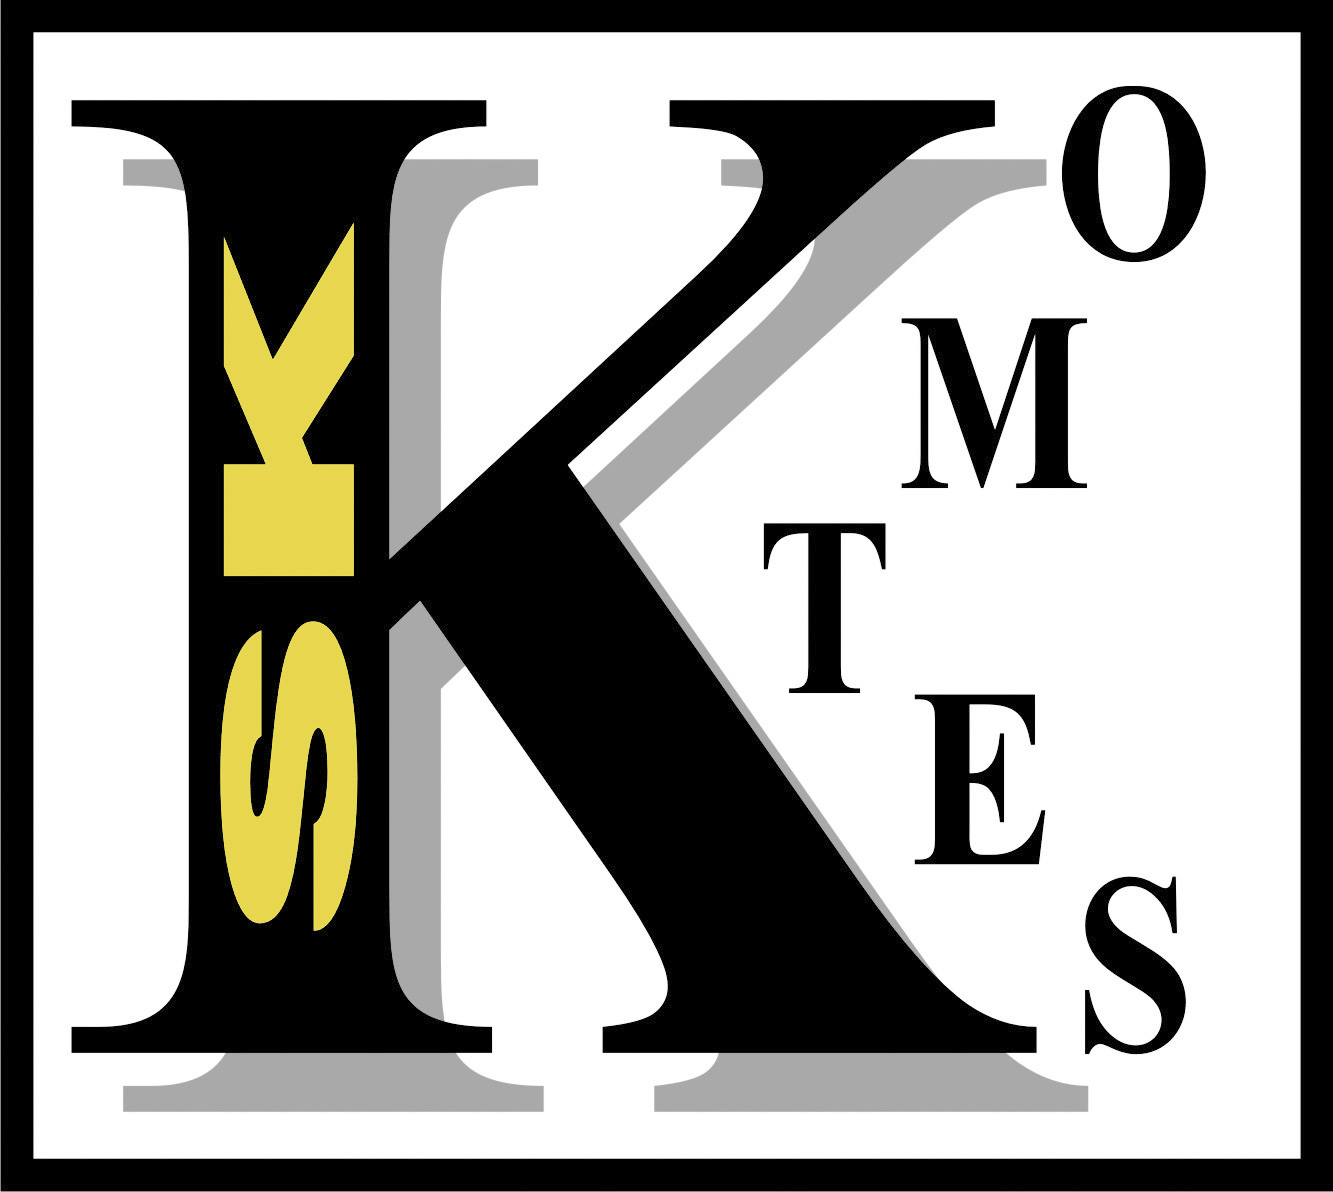 Komtes-logo